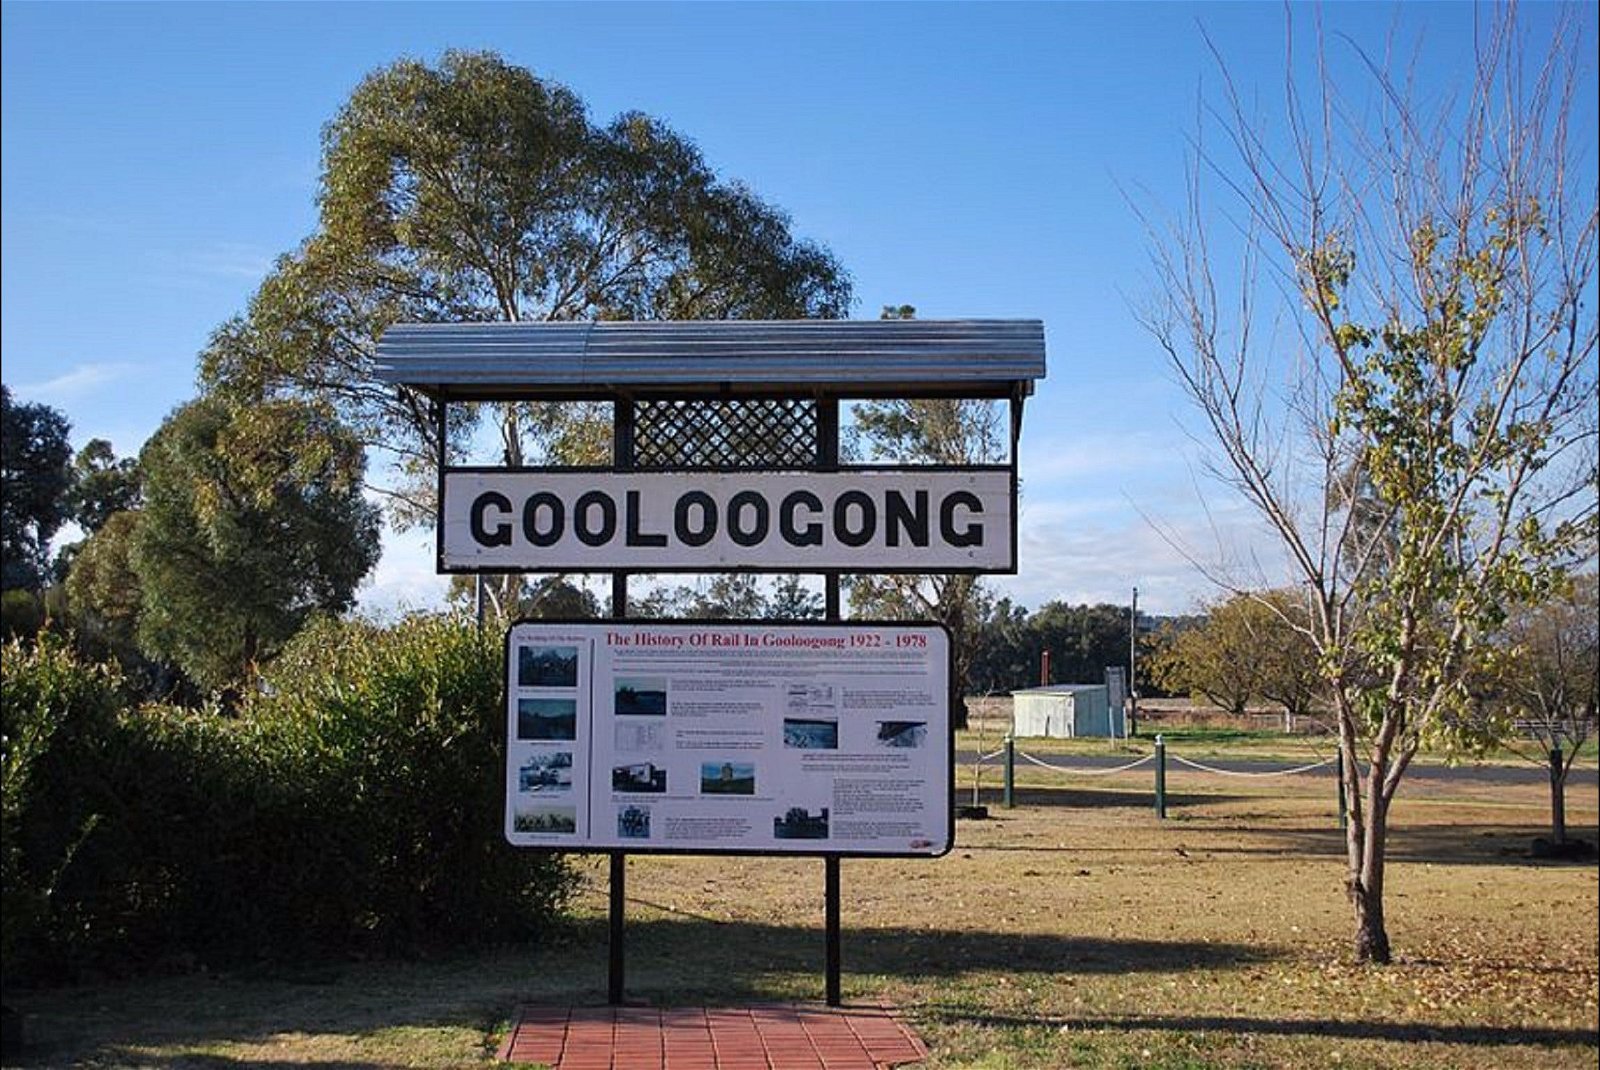 Gooloogong NSW Brisbane 4u